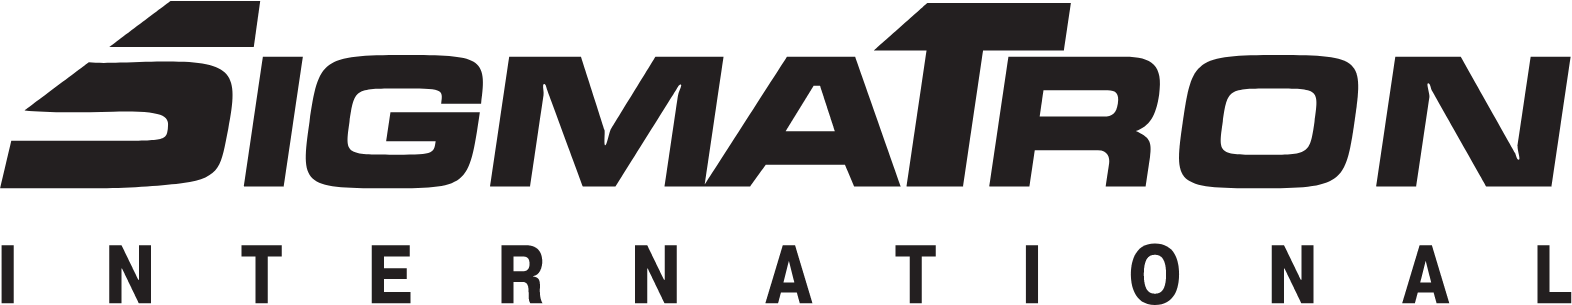 SigmaTron International logo large (transparent PNG)